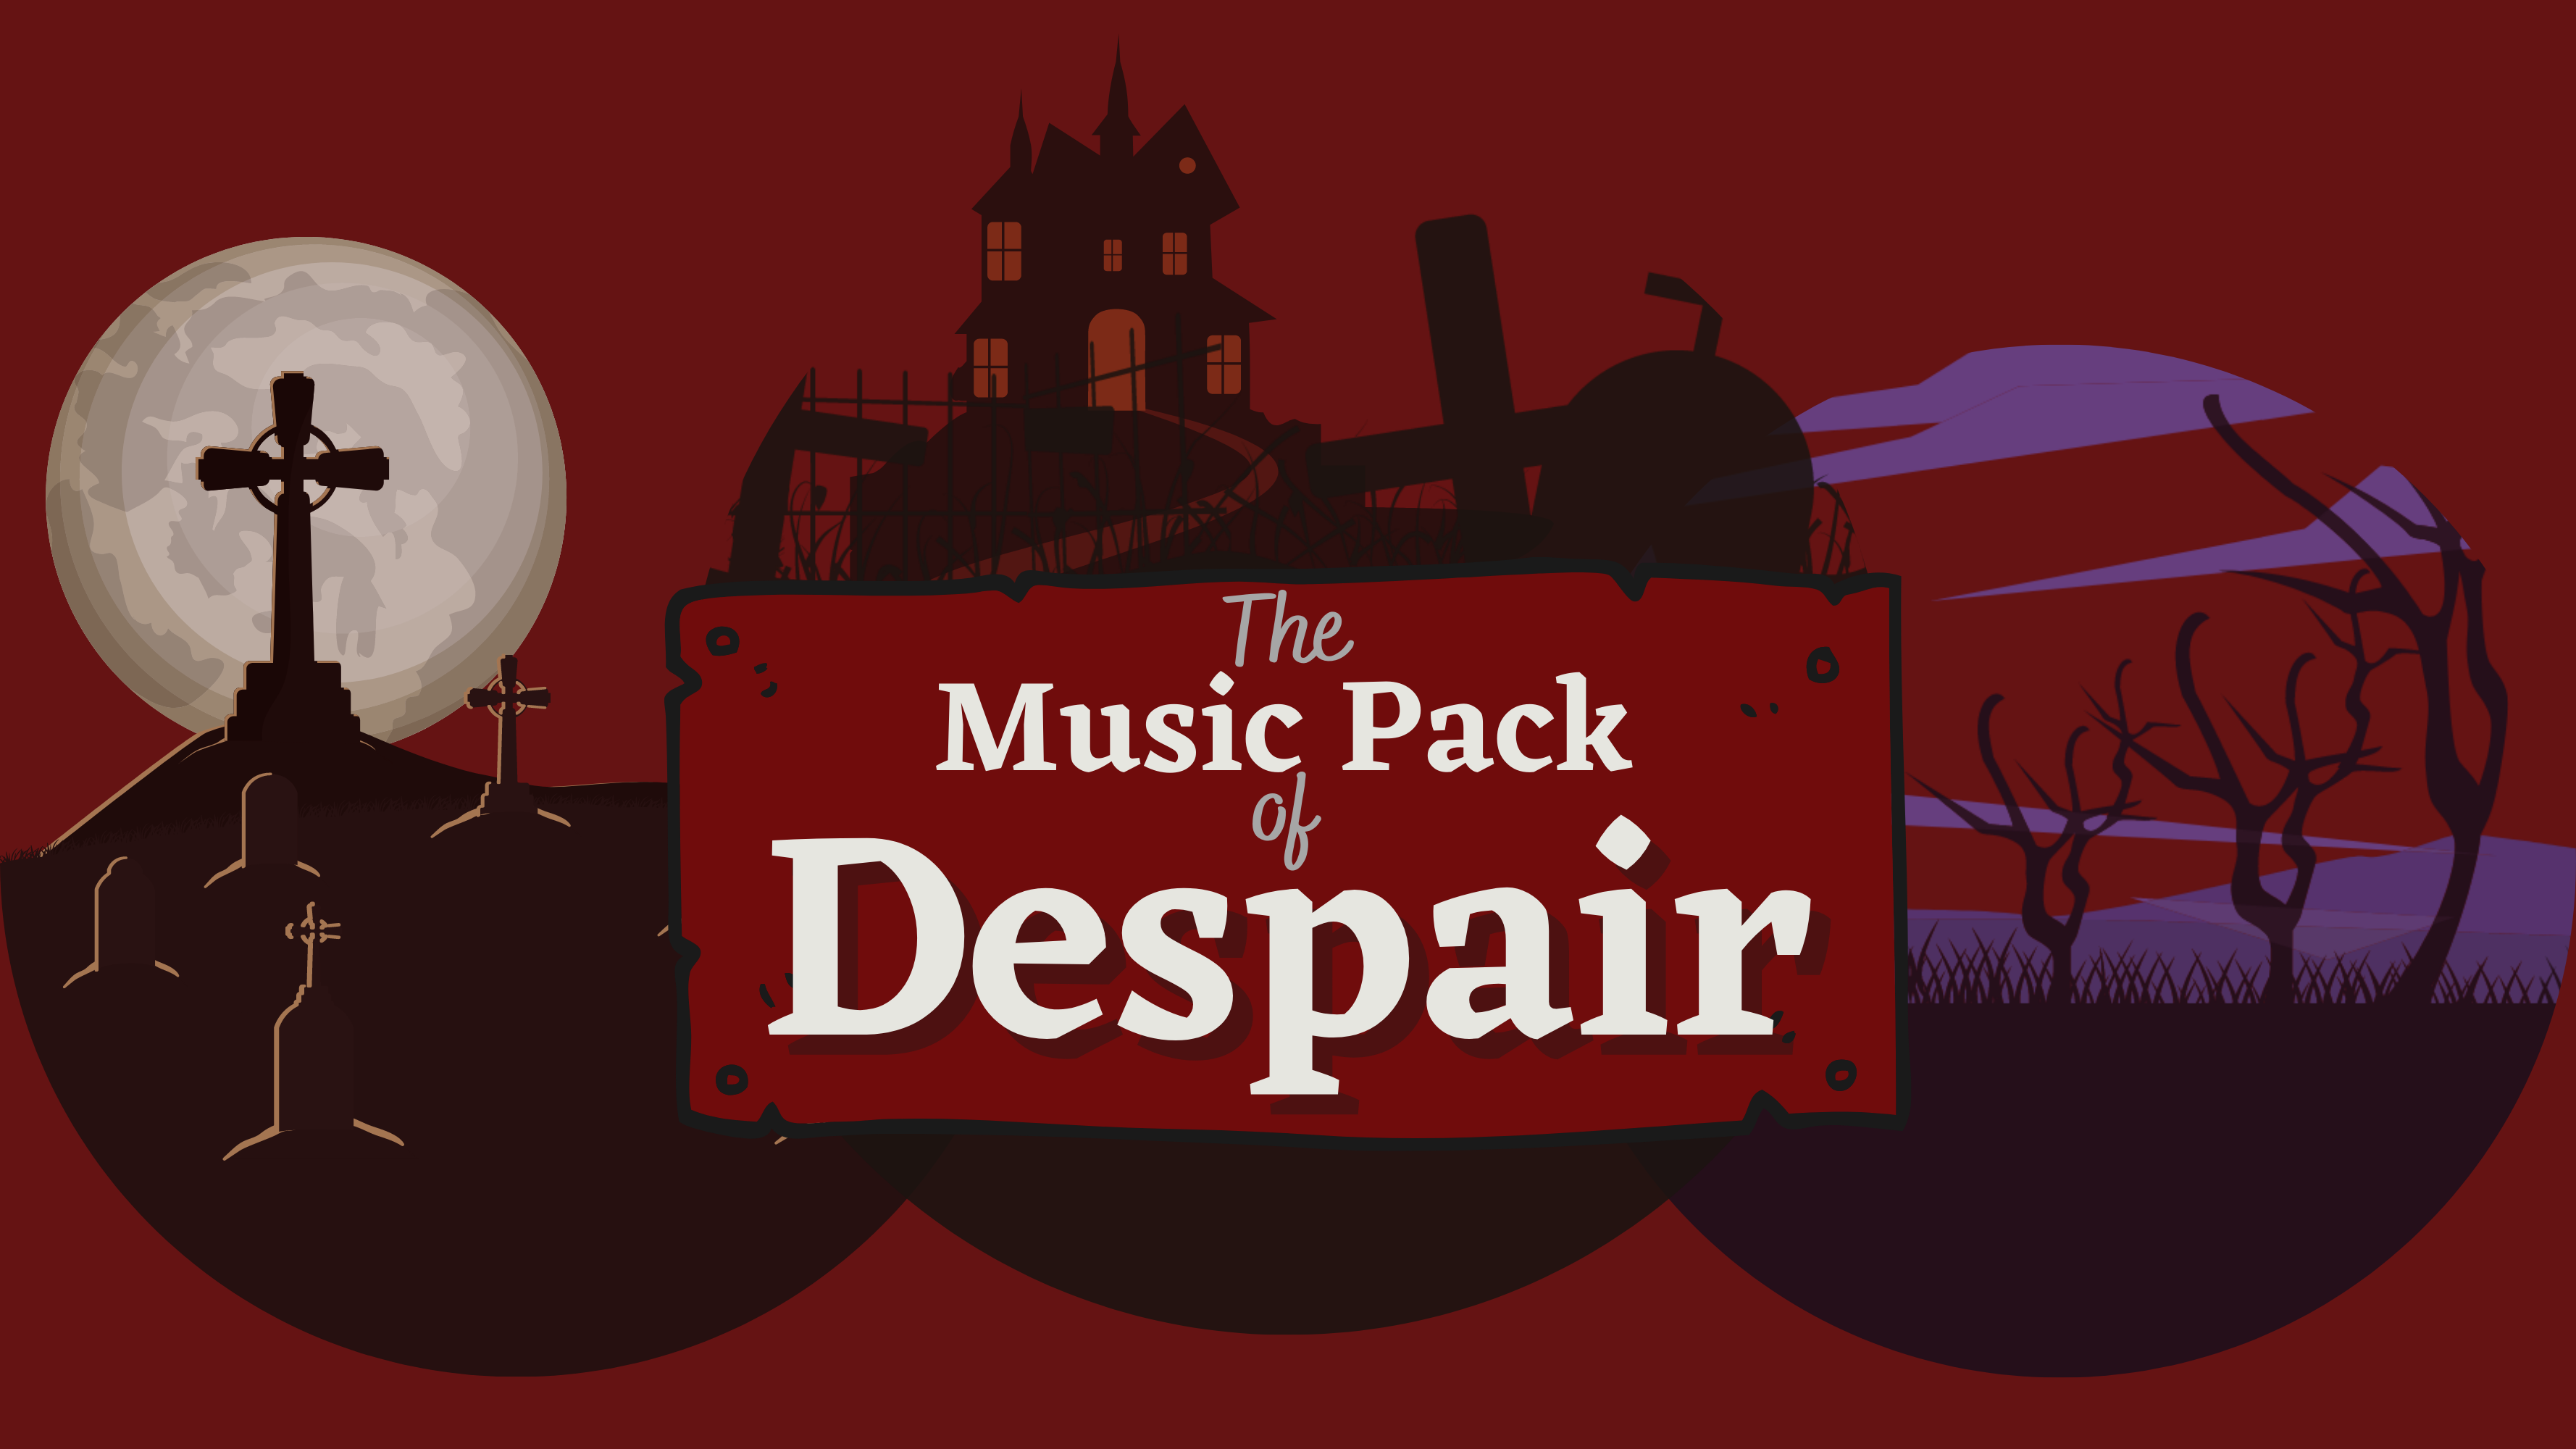 The Music Pack of Despair